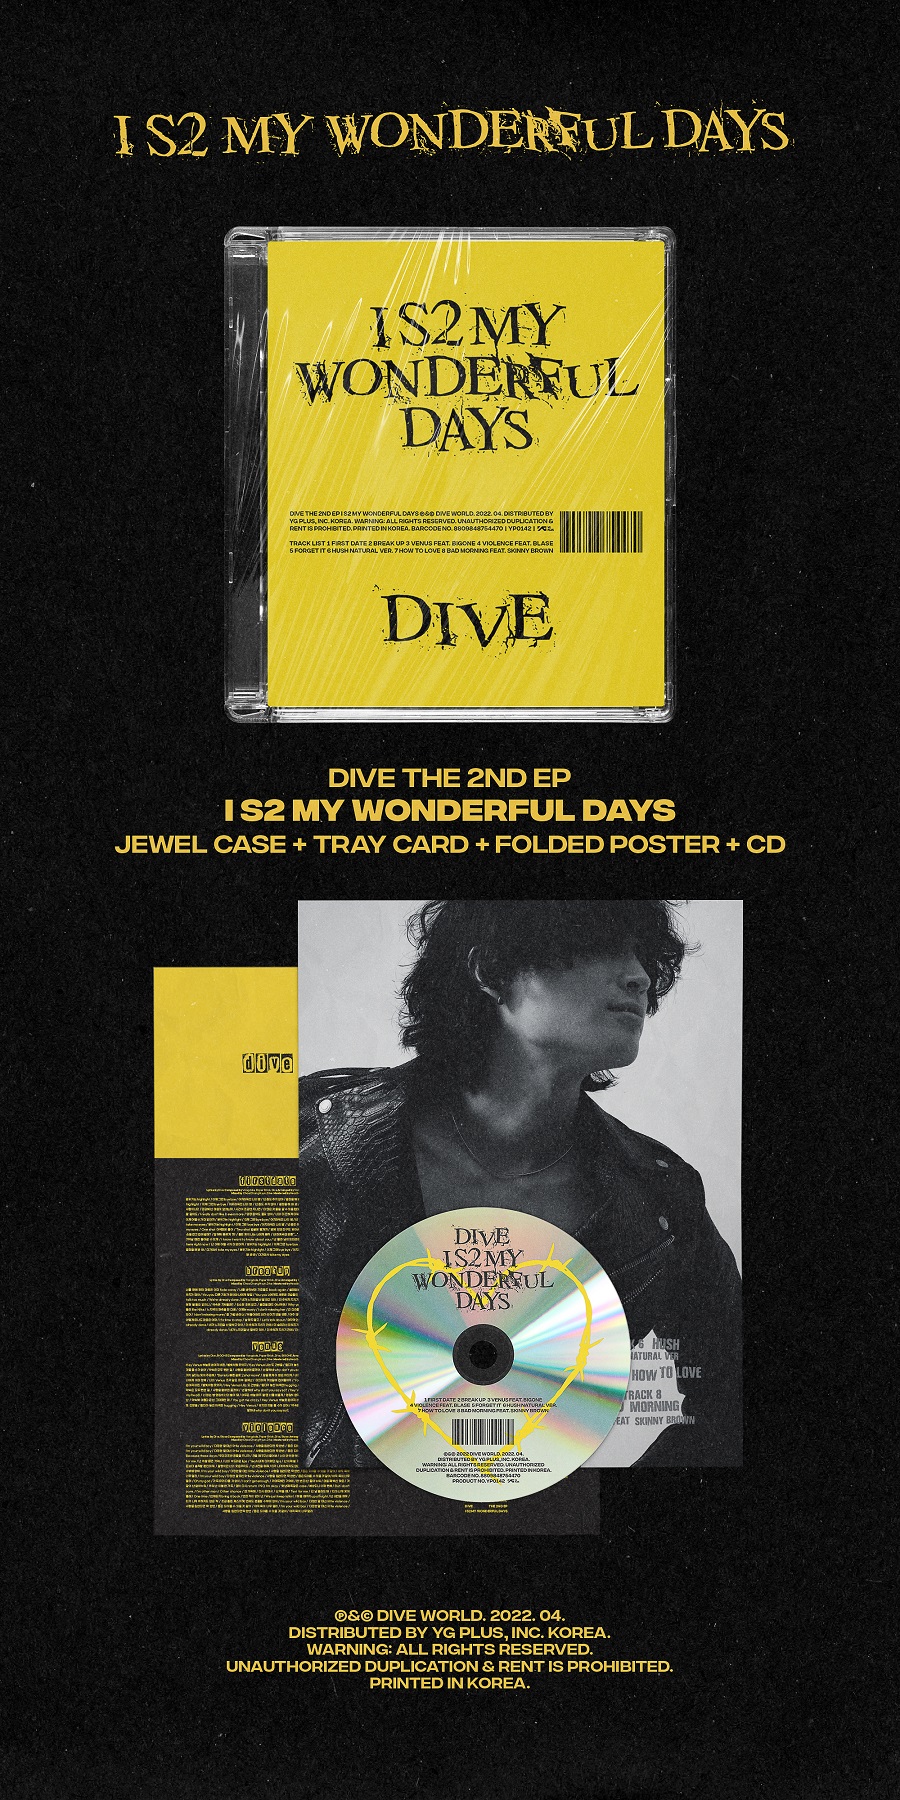 Dive(다이브) - I S2 MY WONDERFUL DAYS